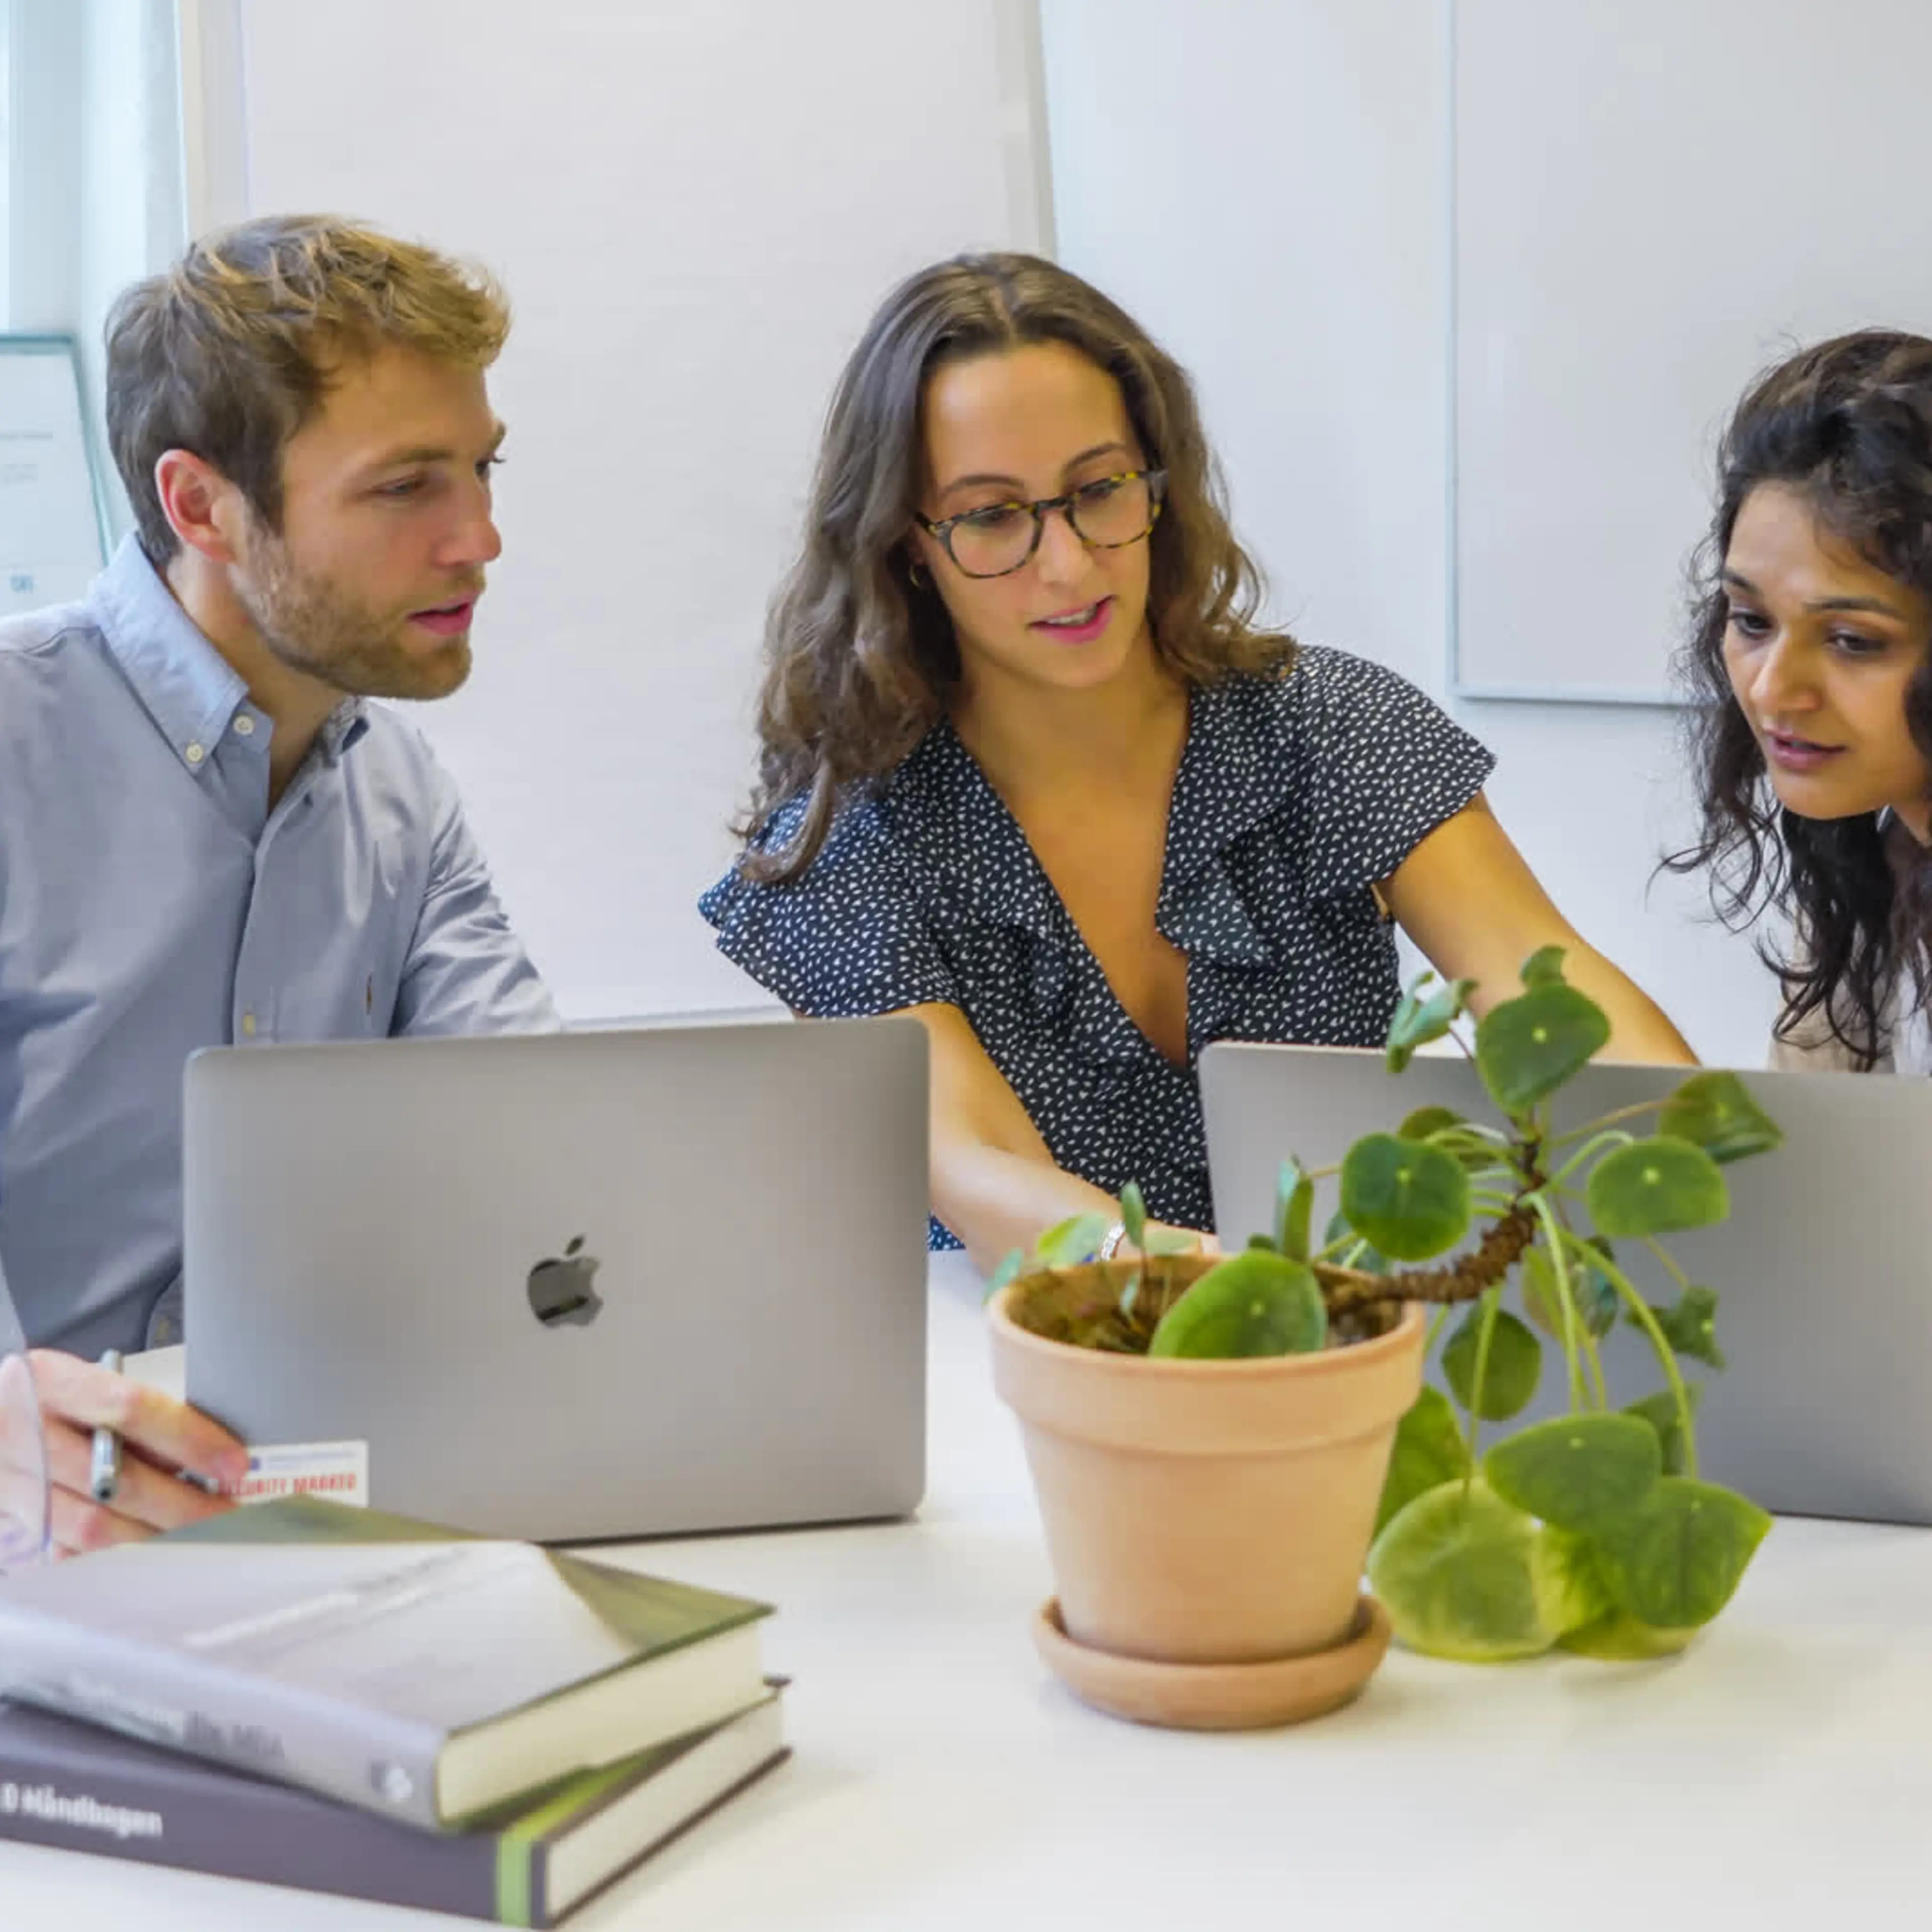 Three Copenhagen MBA students working together